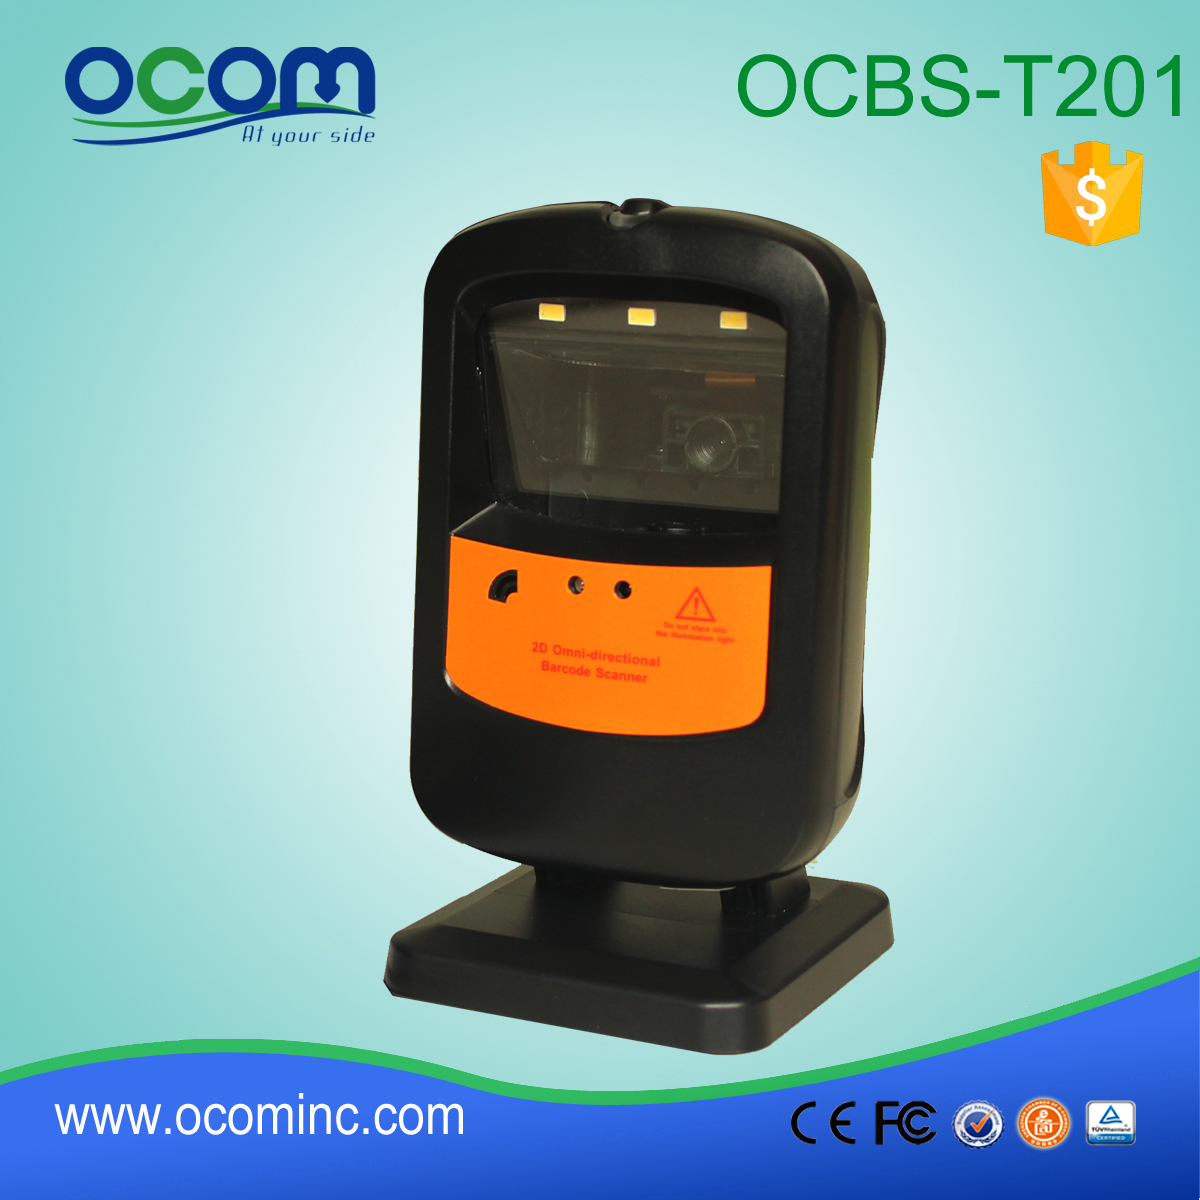 OCBS-T201: code à barres à plat prix du scanner, la Chine scanner de codes barres